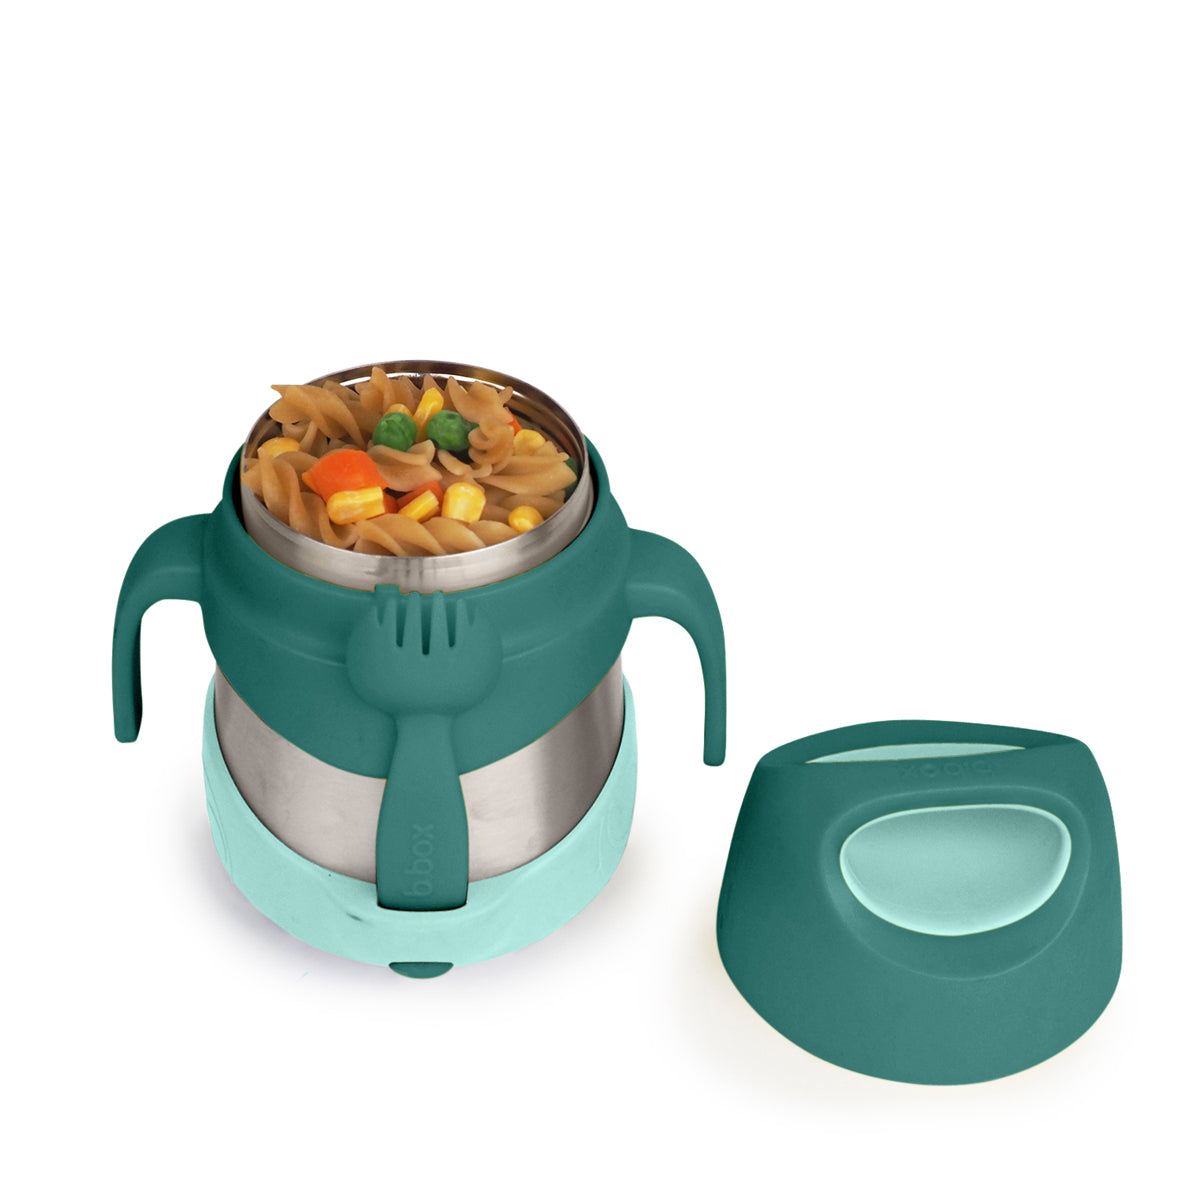 b.box Insulated Food Jar 335ml Emerald Forest Green